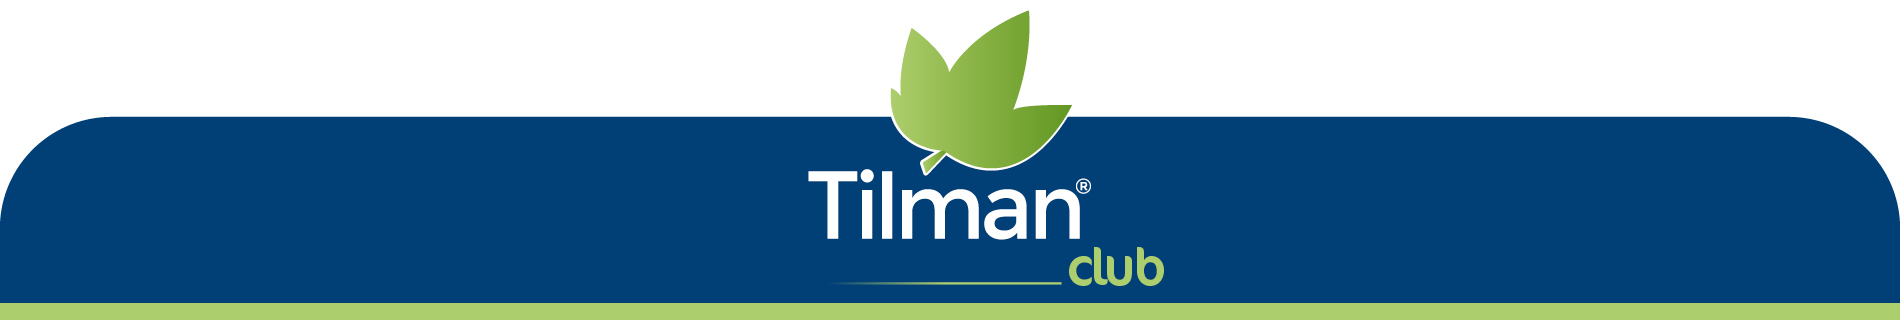 tilman_lp-club-officine-header-desktop